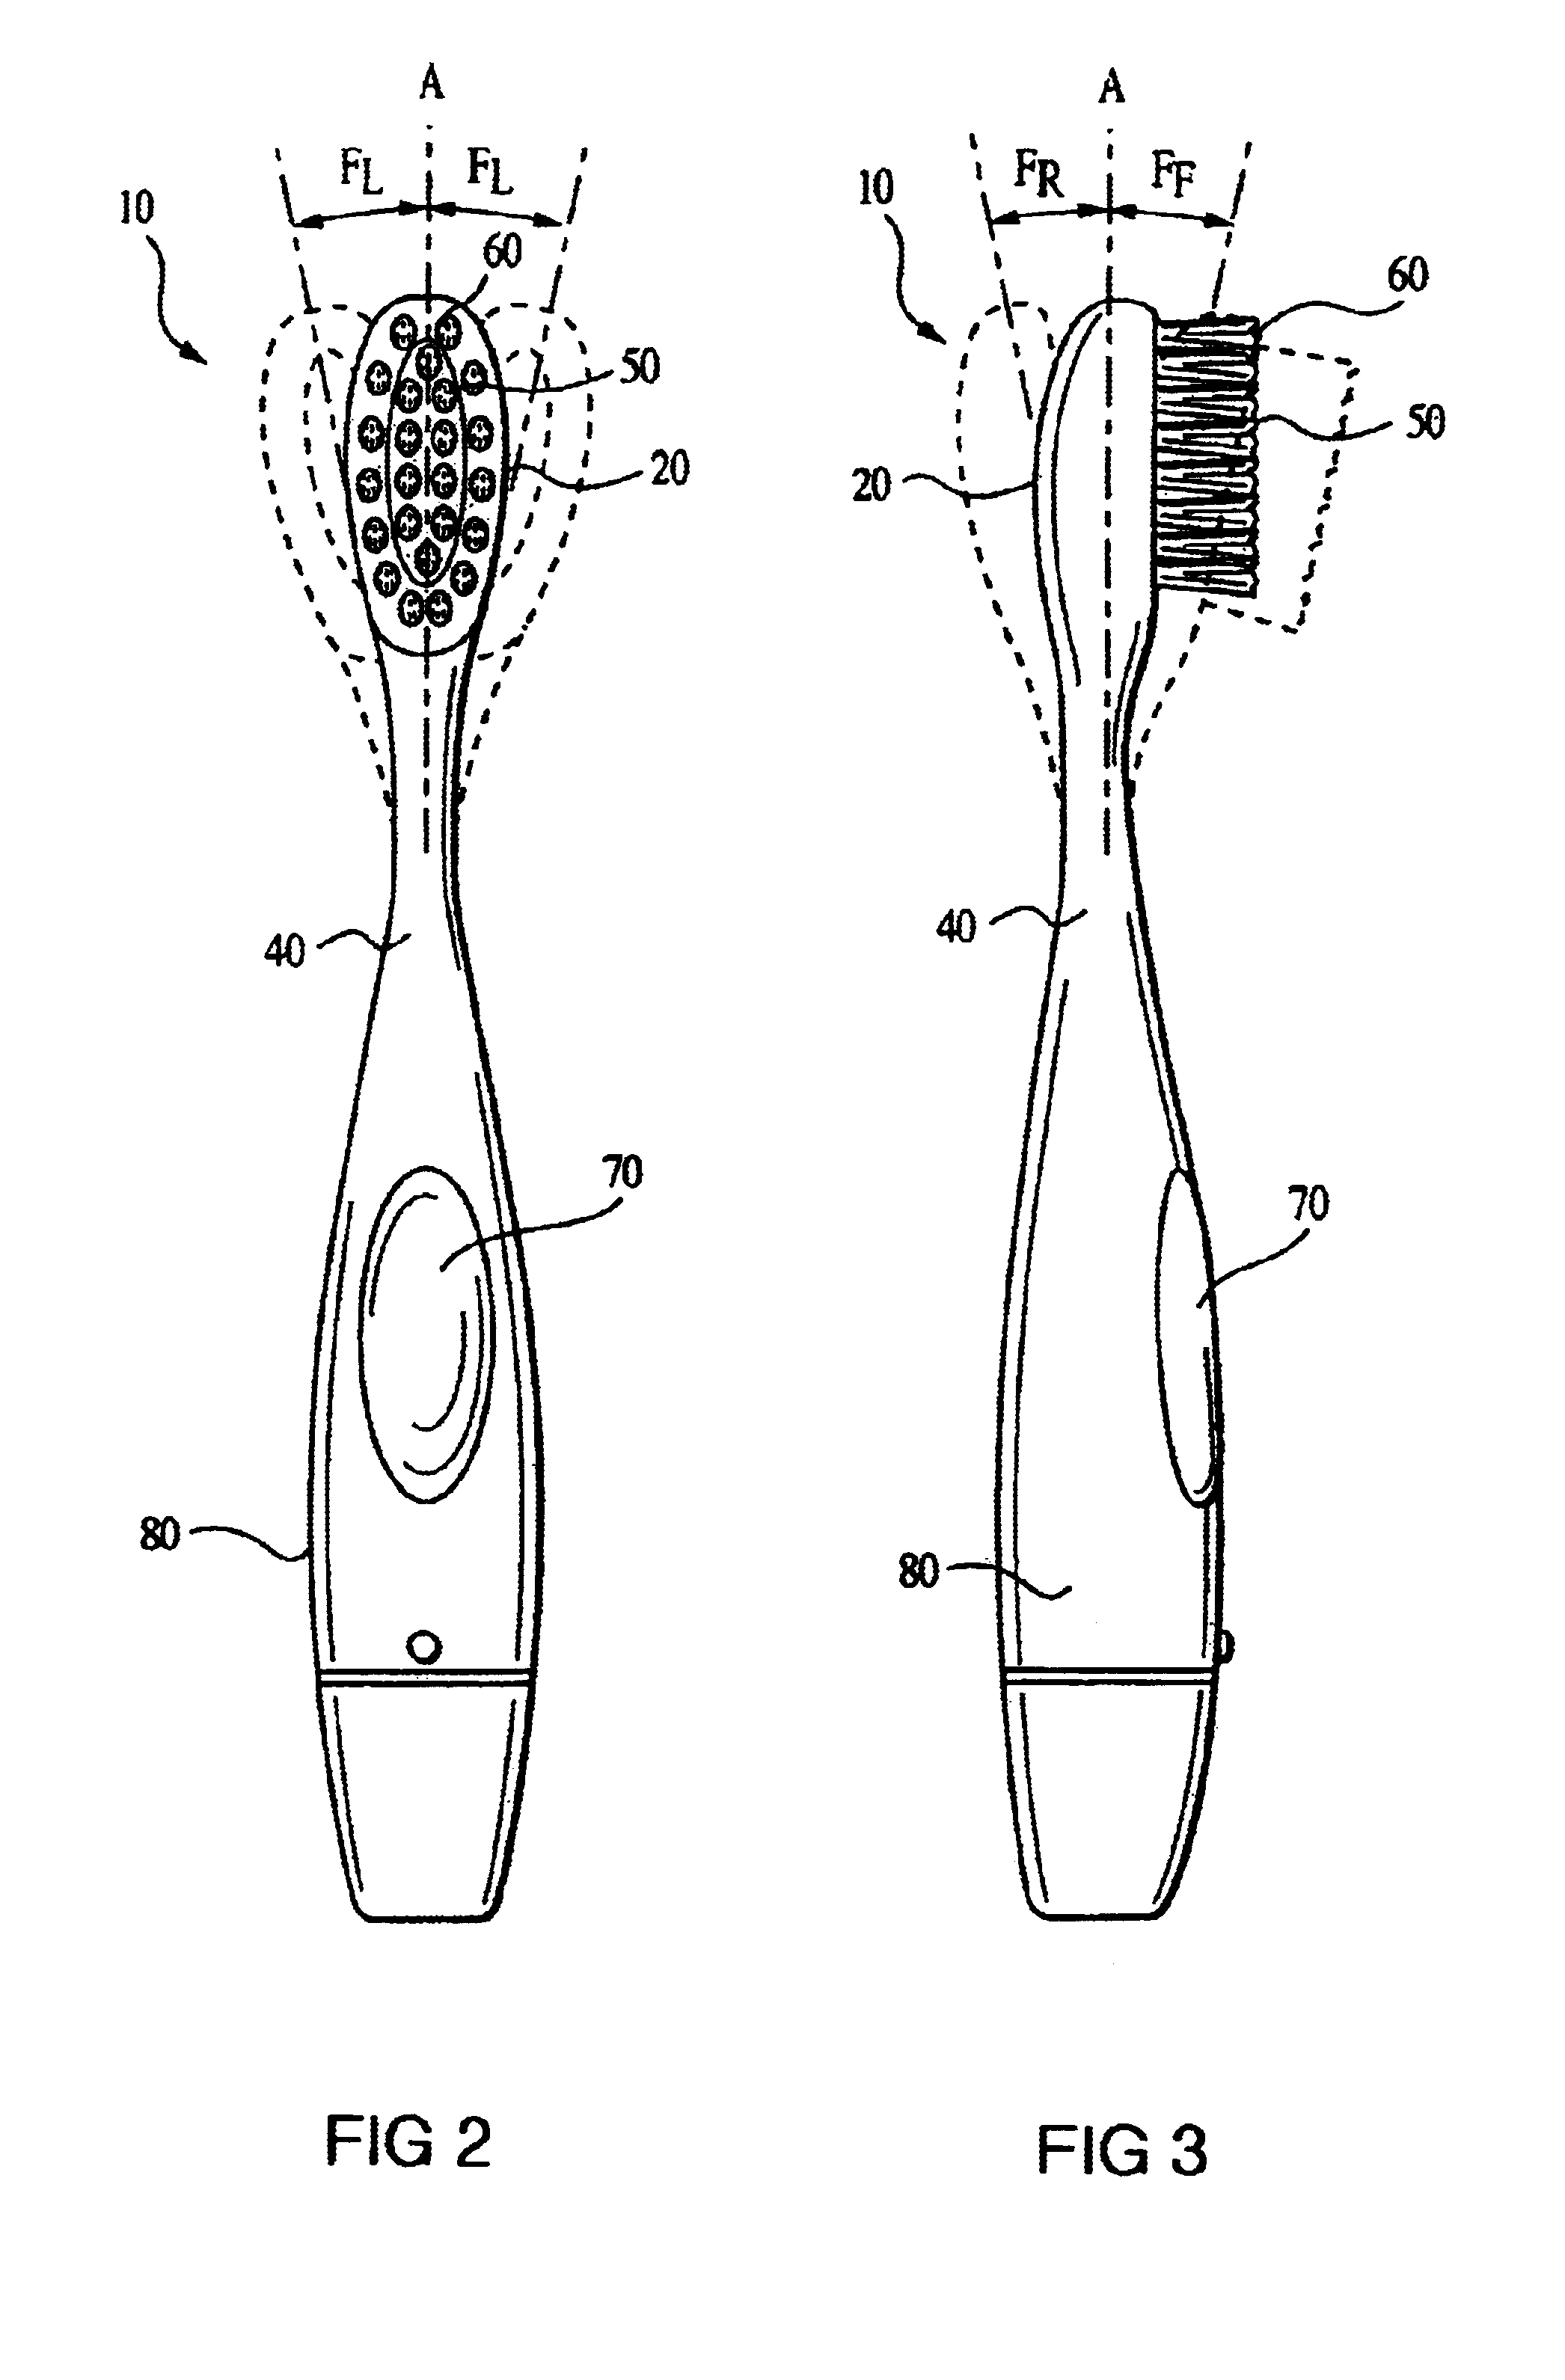 Electric toothbrushes having flexible necks